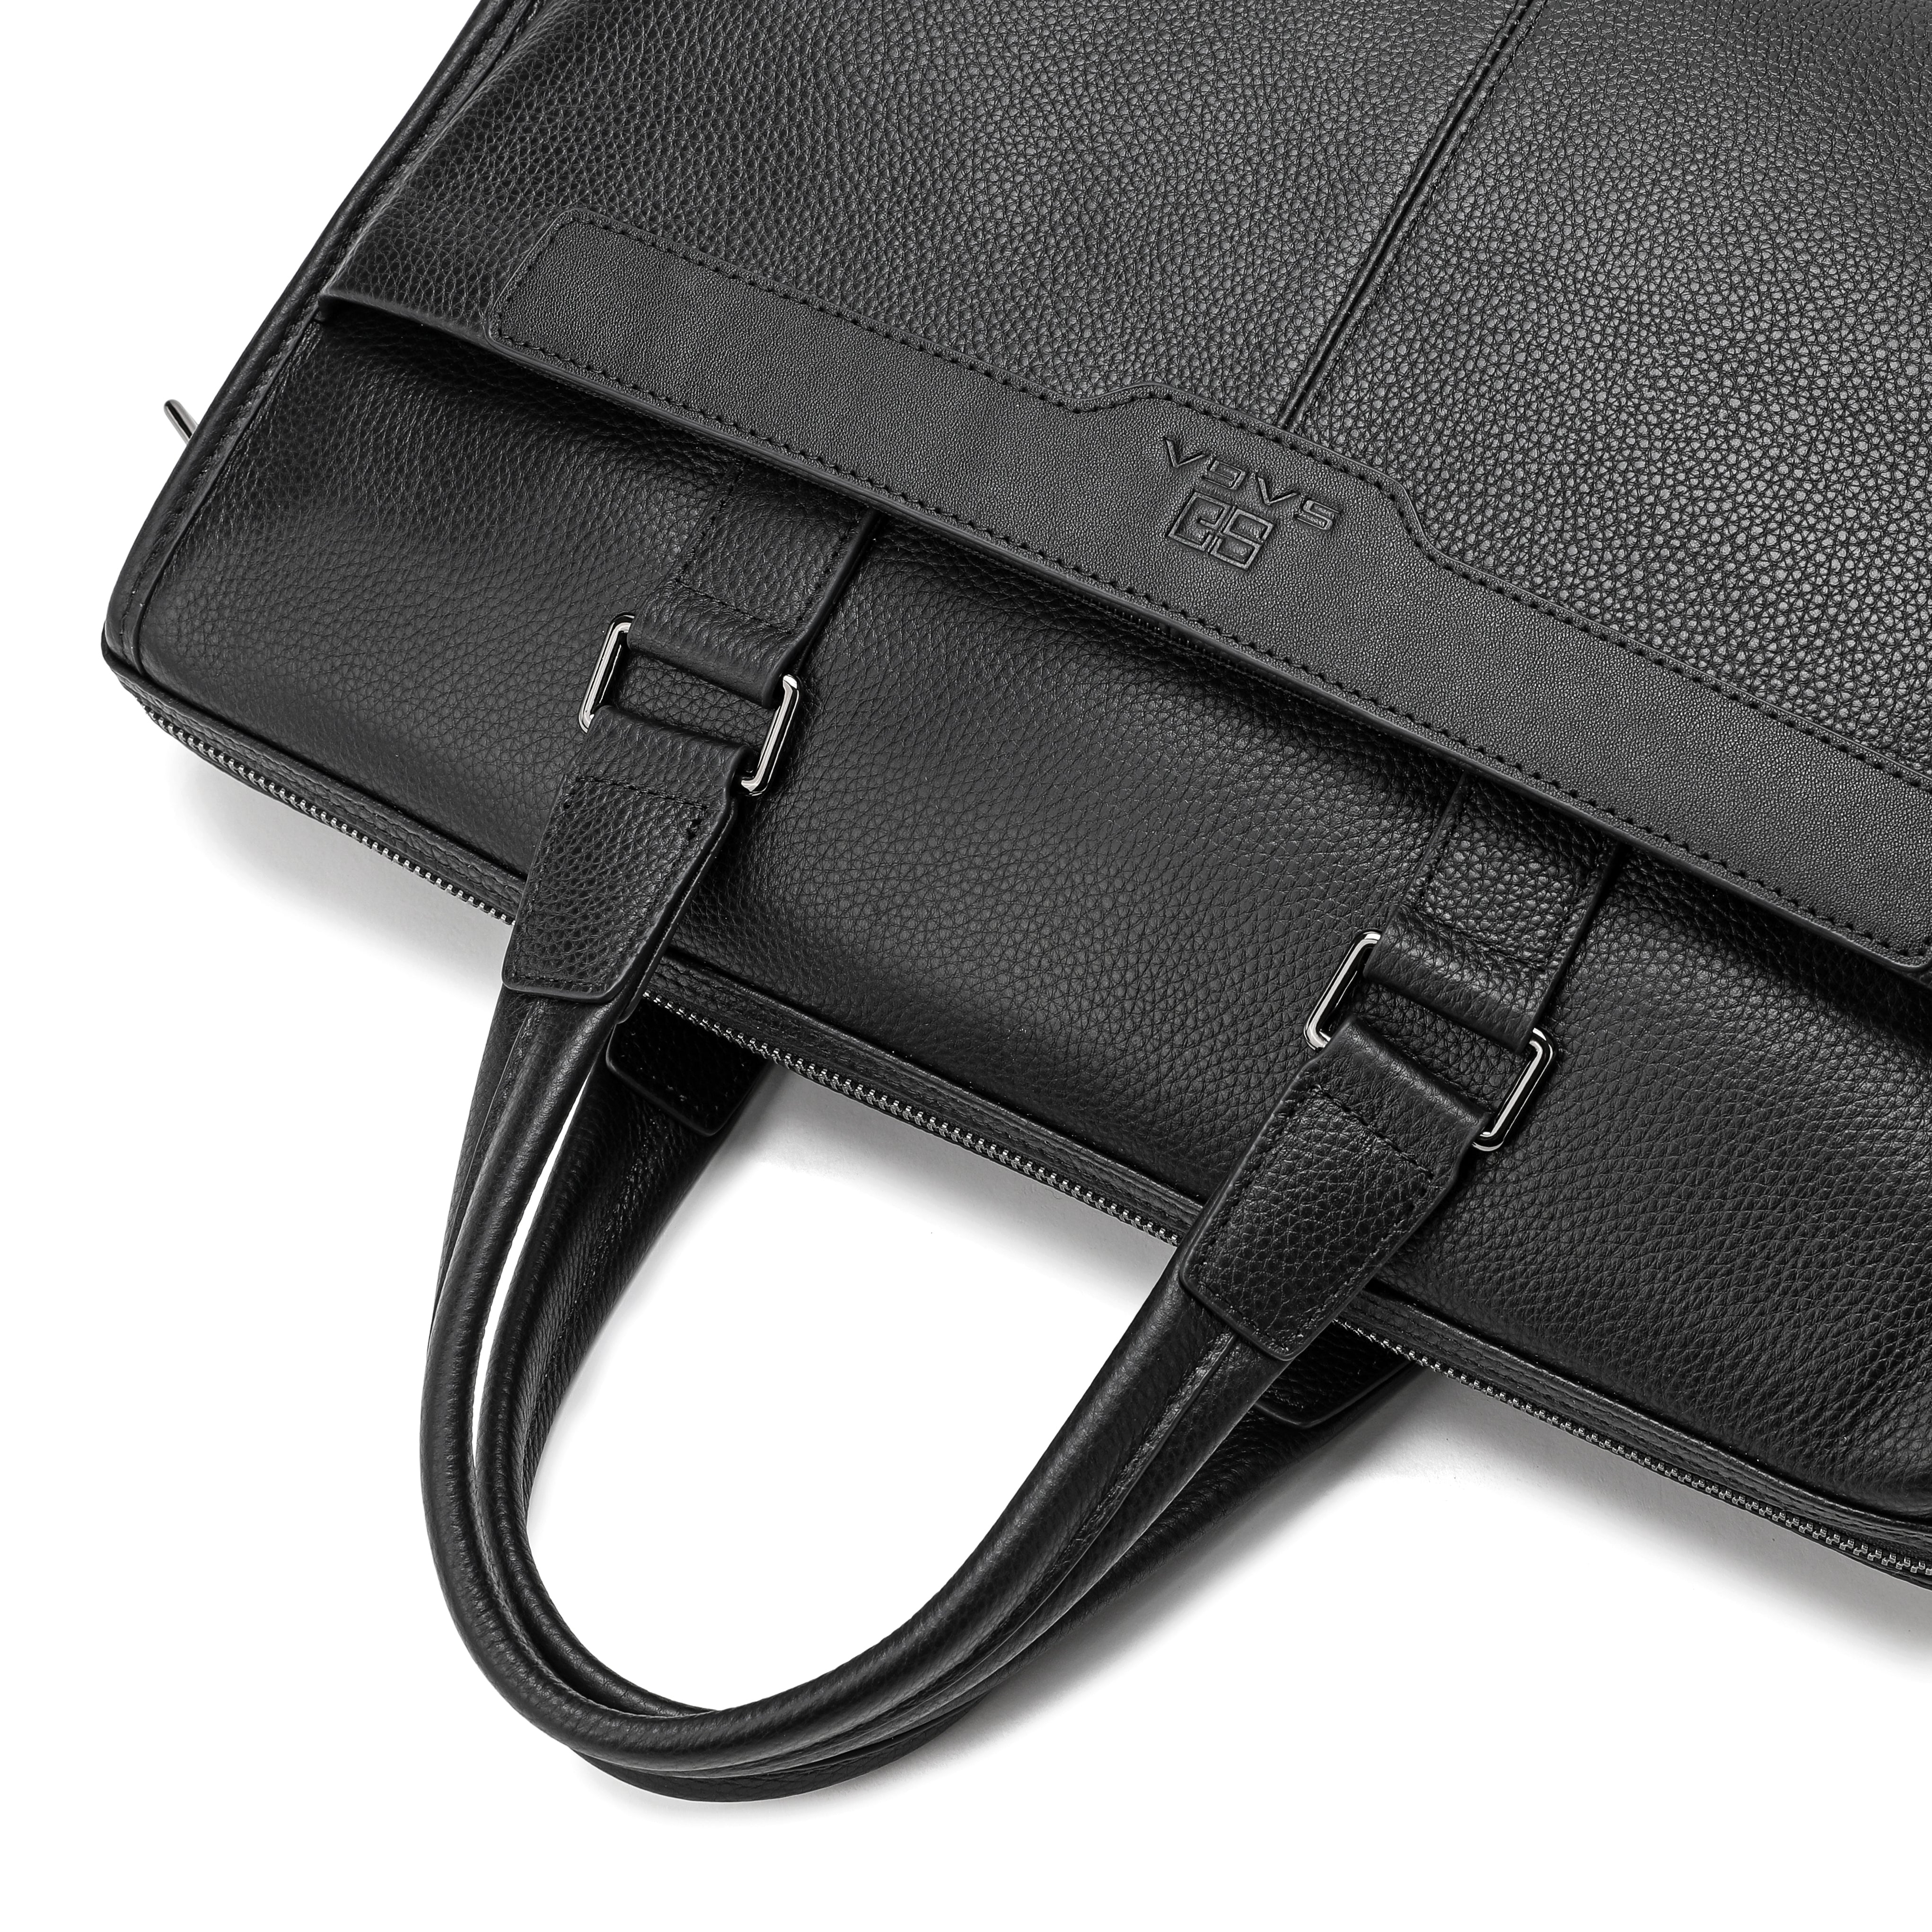 100% genuine leather laptop bag, high quality, black color